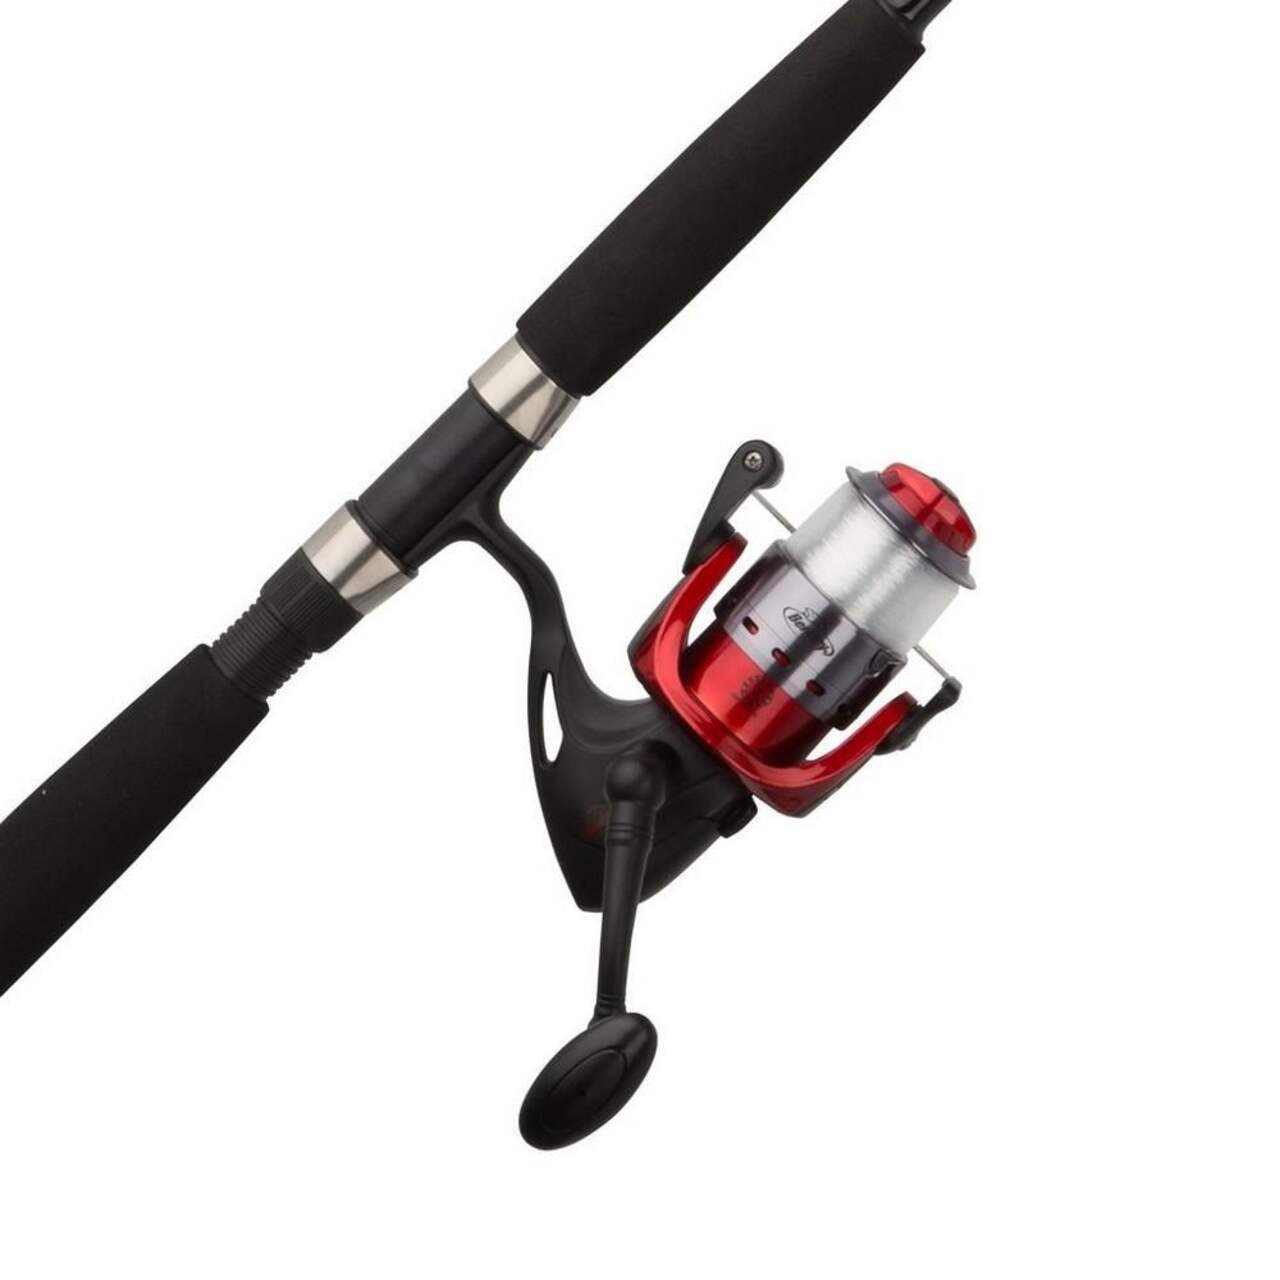 Fishingmonk on Instagram: Berkley Big Game Spinning Rod  7ft - 8ft    #berkley #fishingmonk #fishing #rod #fishingrod #spinningrod #tackle  #biggame